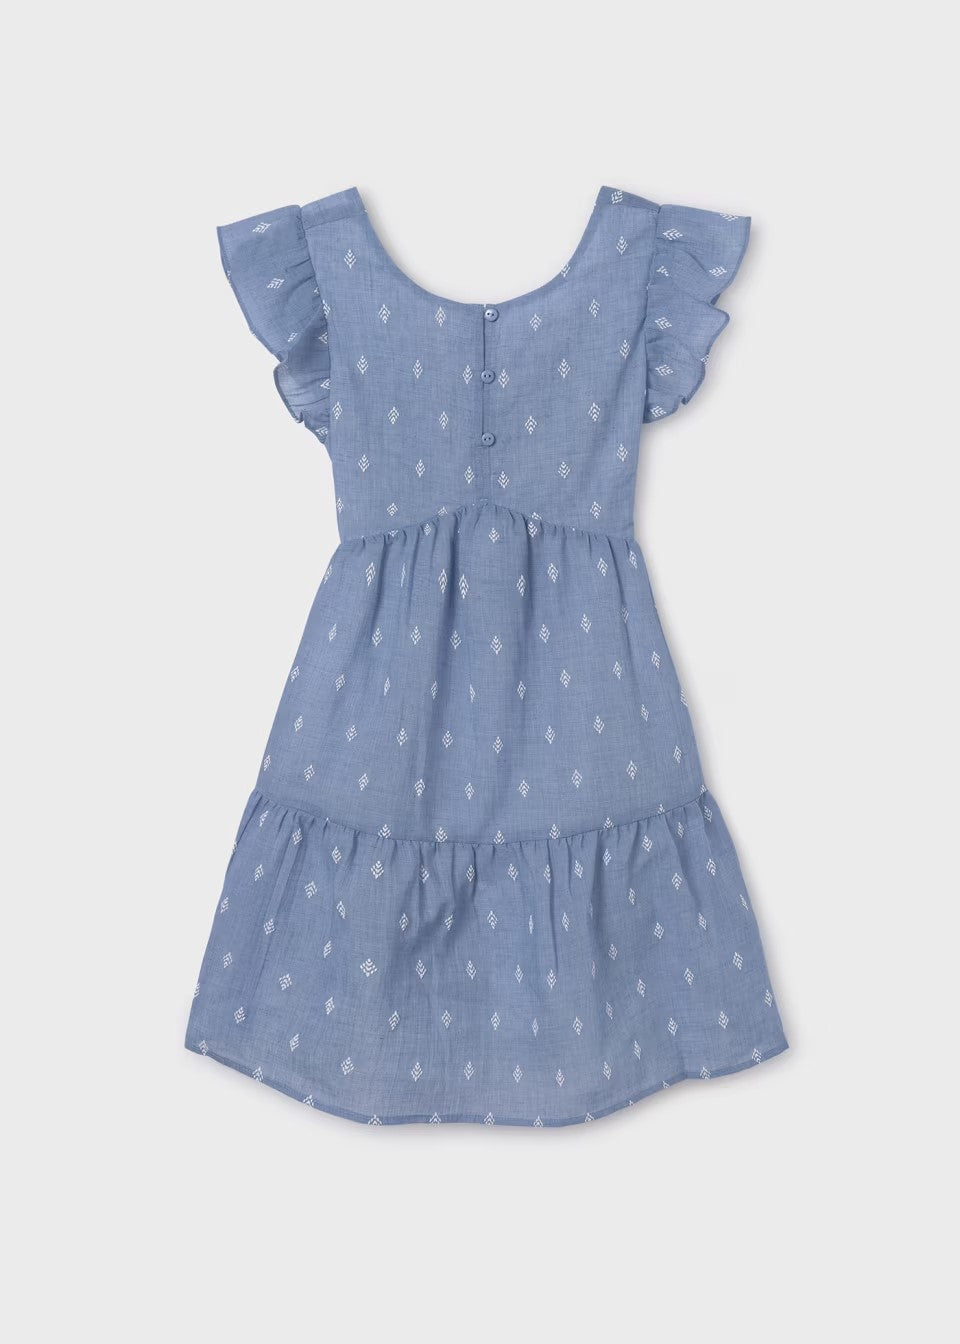 6952 - Tween Cotton Dress - Chambray